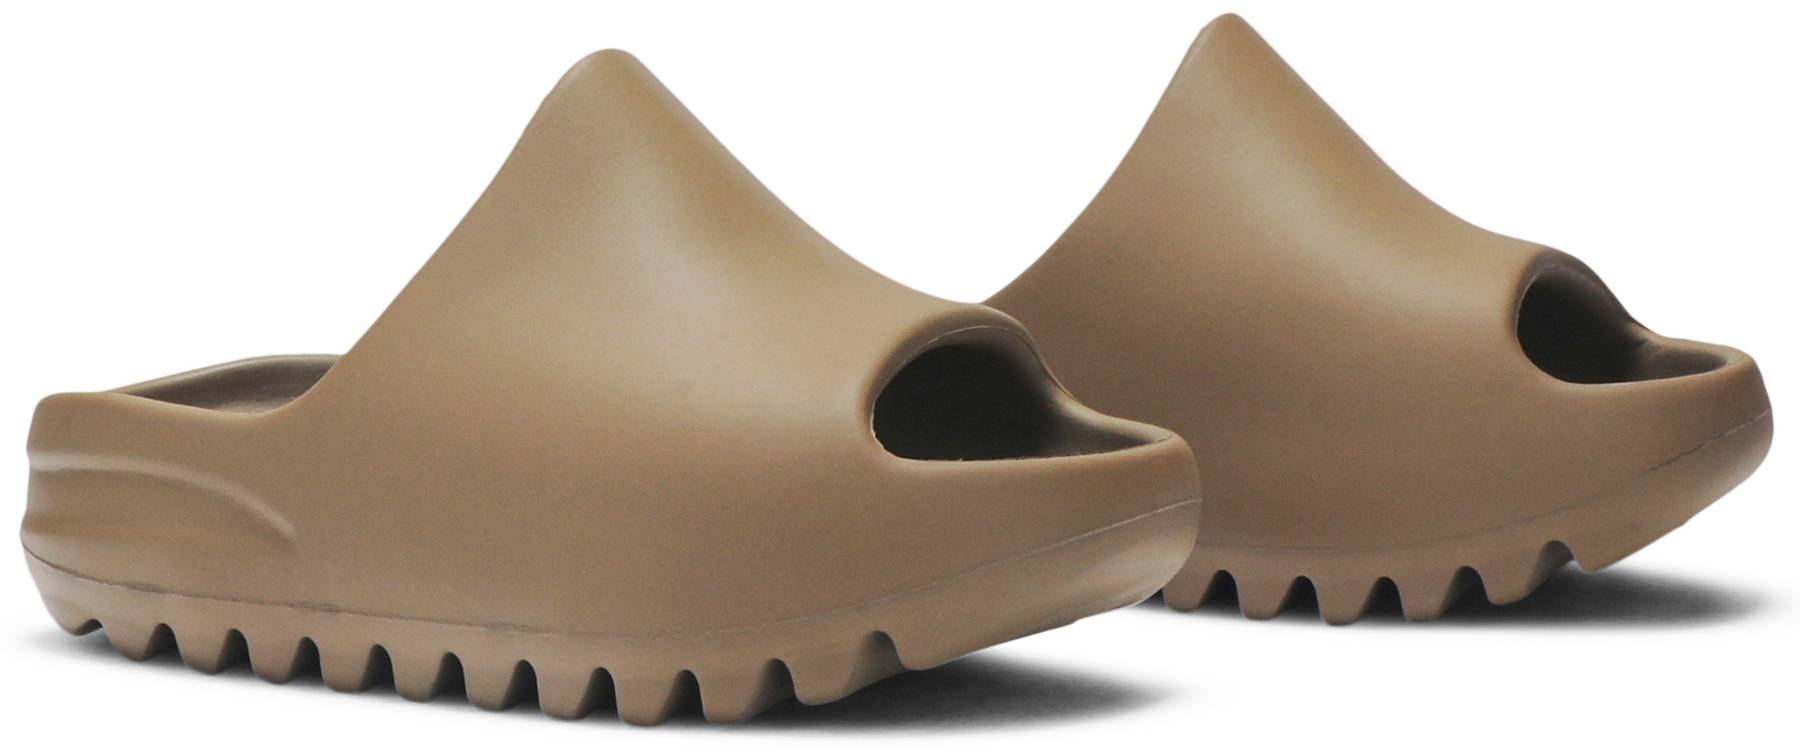 Yeezy Slides Kids 'Earth Brown' - adidas - FV9907 | GOAT